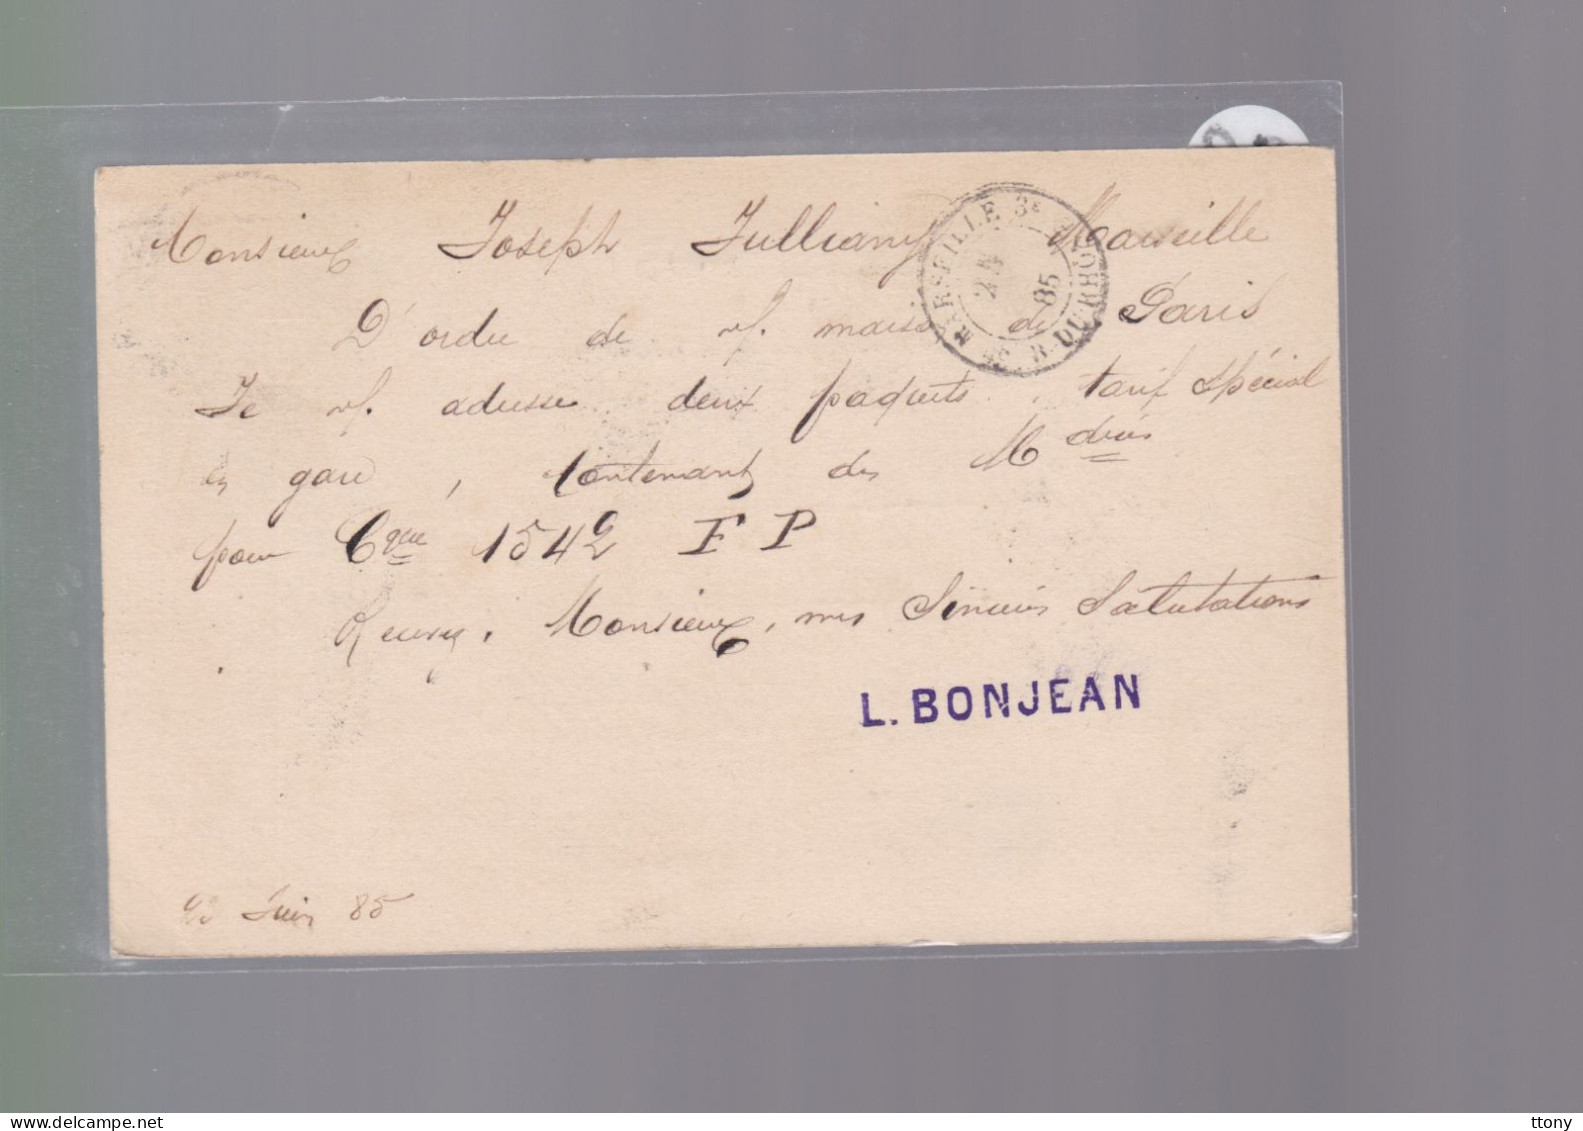 Entier Postal   10 C  Type Sage   Sur Carte Postale   Année 1885     Destination  Marseille - 1877-1920: Semi Modern Period